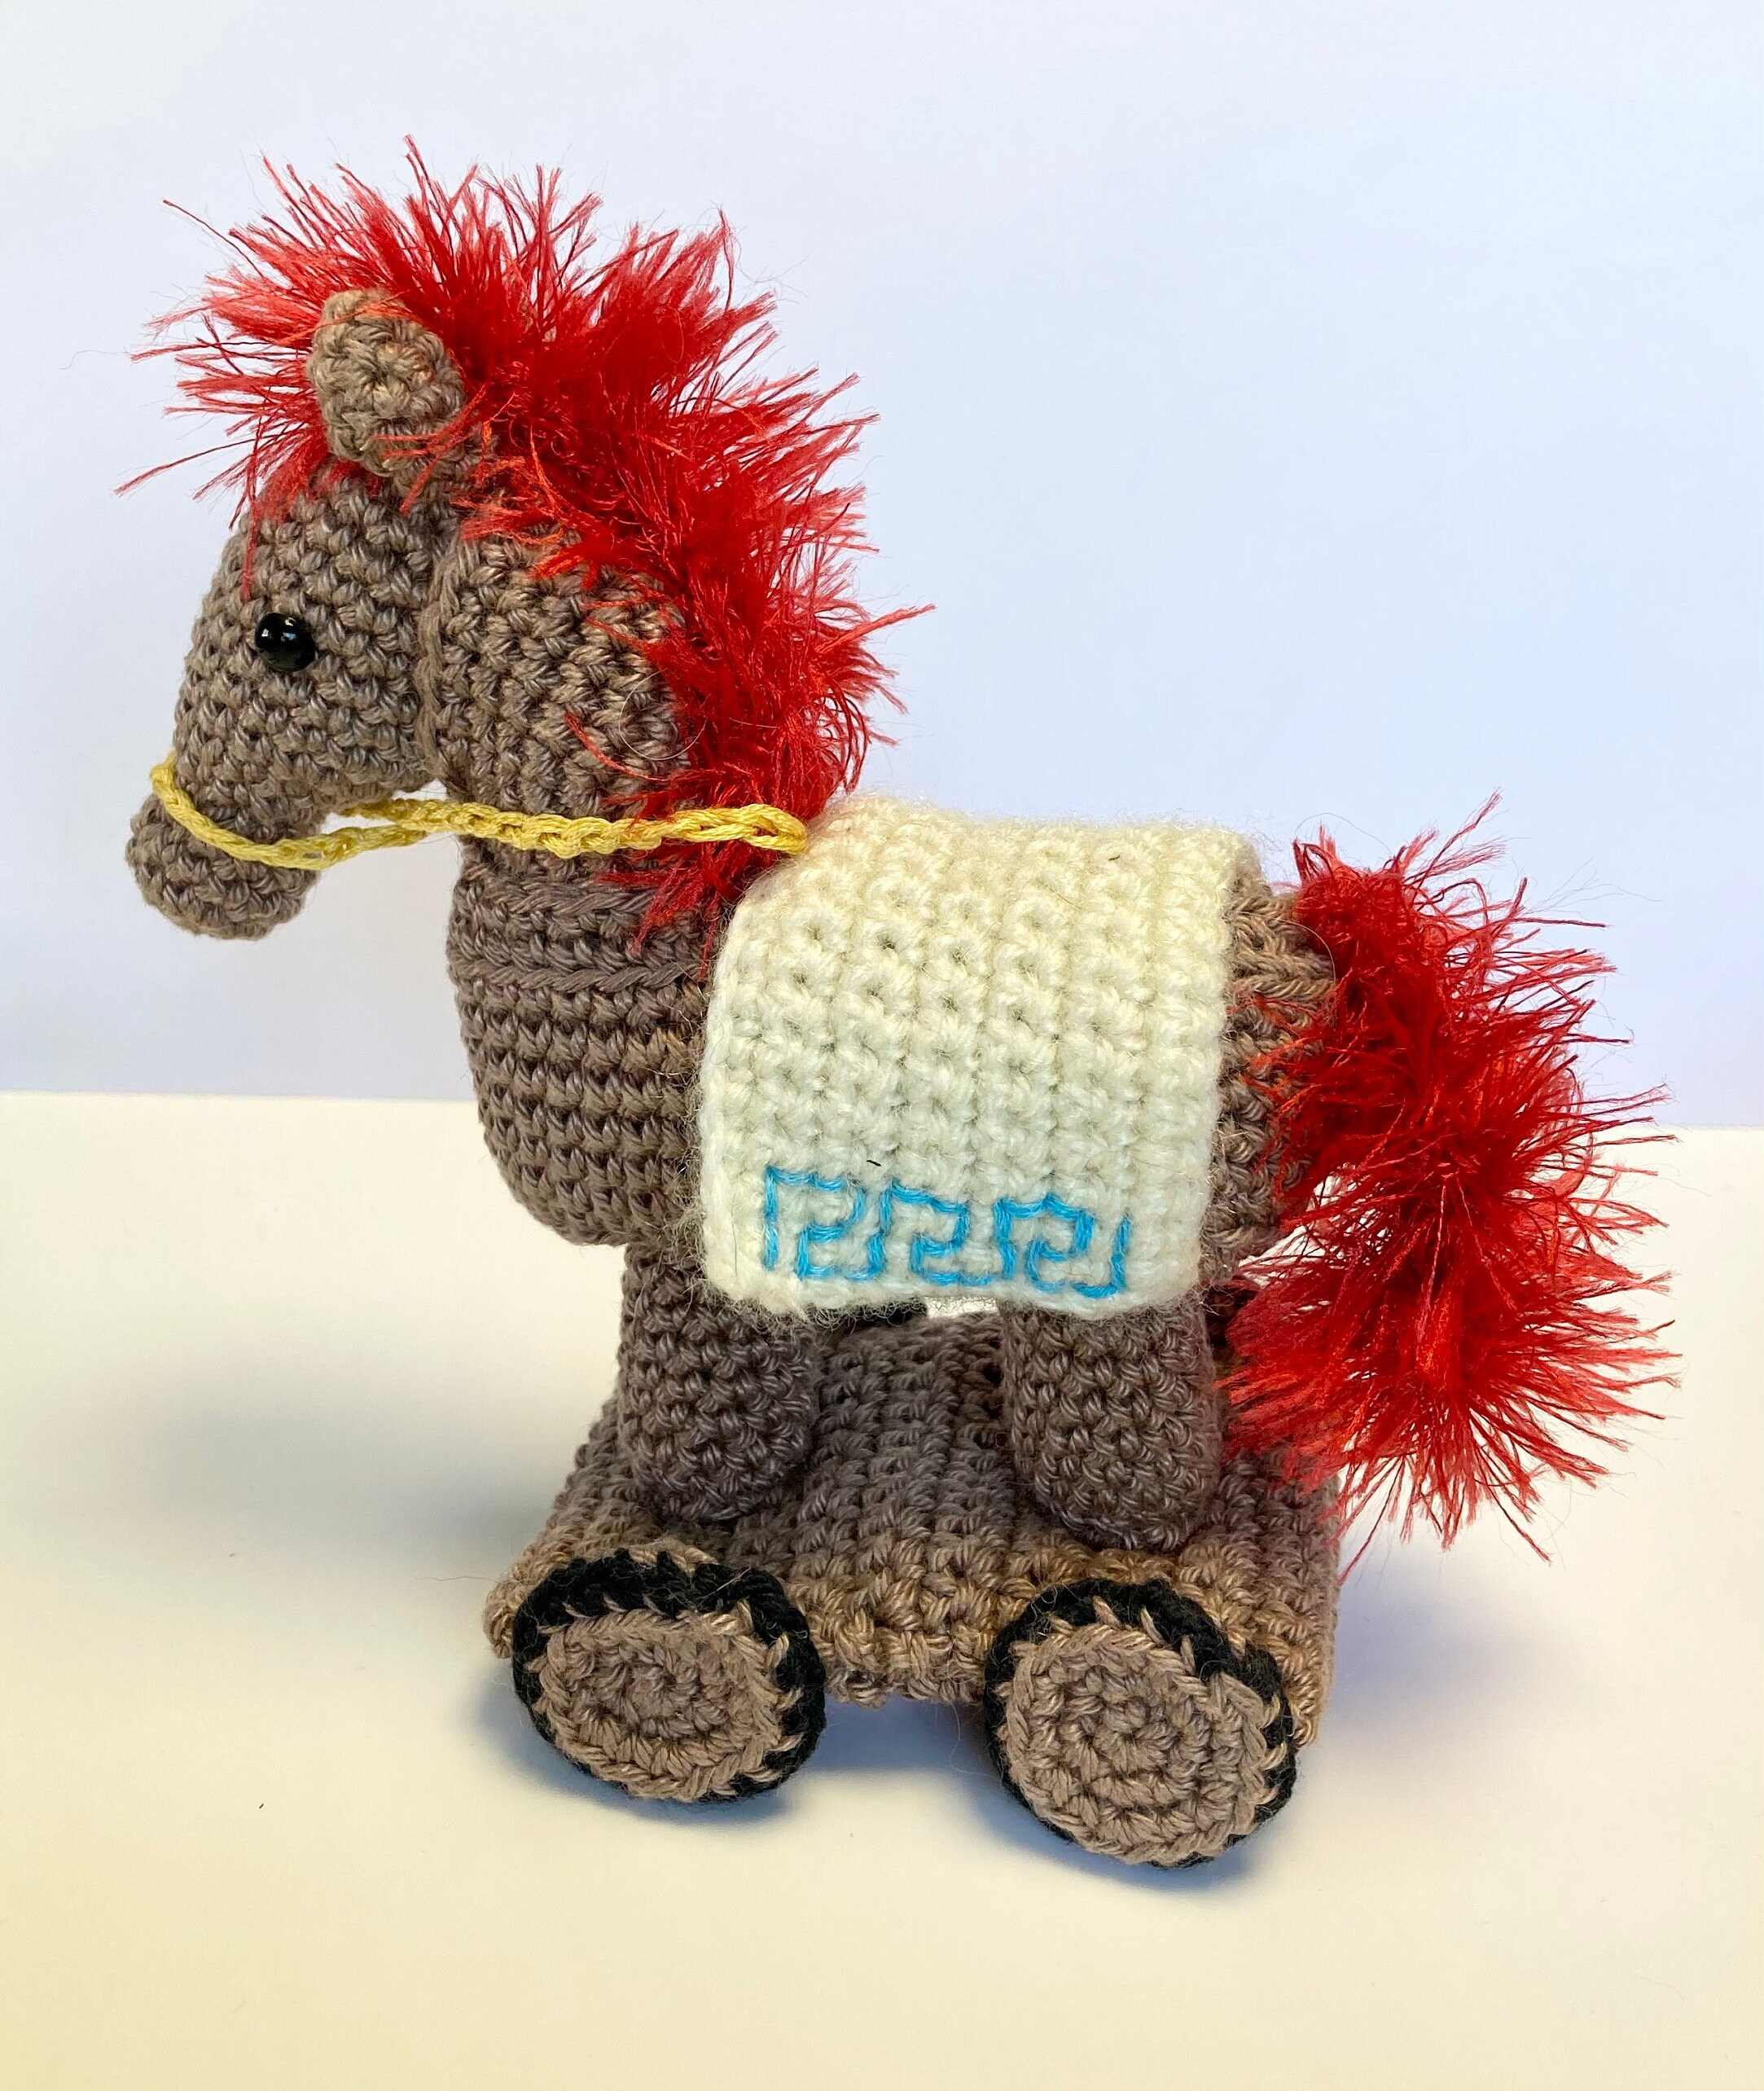 Crochet Kit for Cute Amigurumi Animal Farm Toys/bundle/diy Crochet